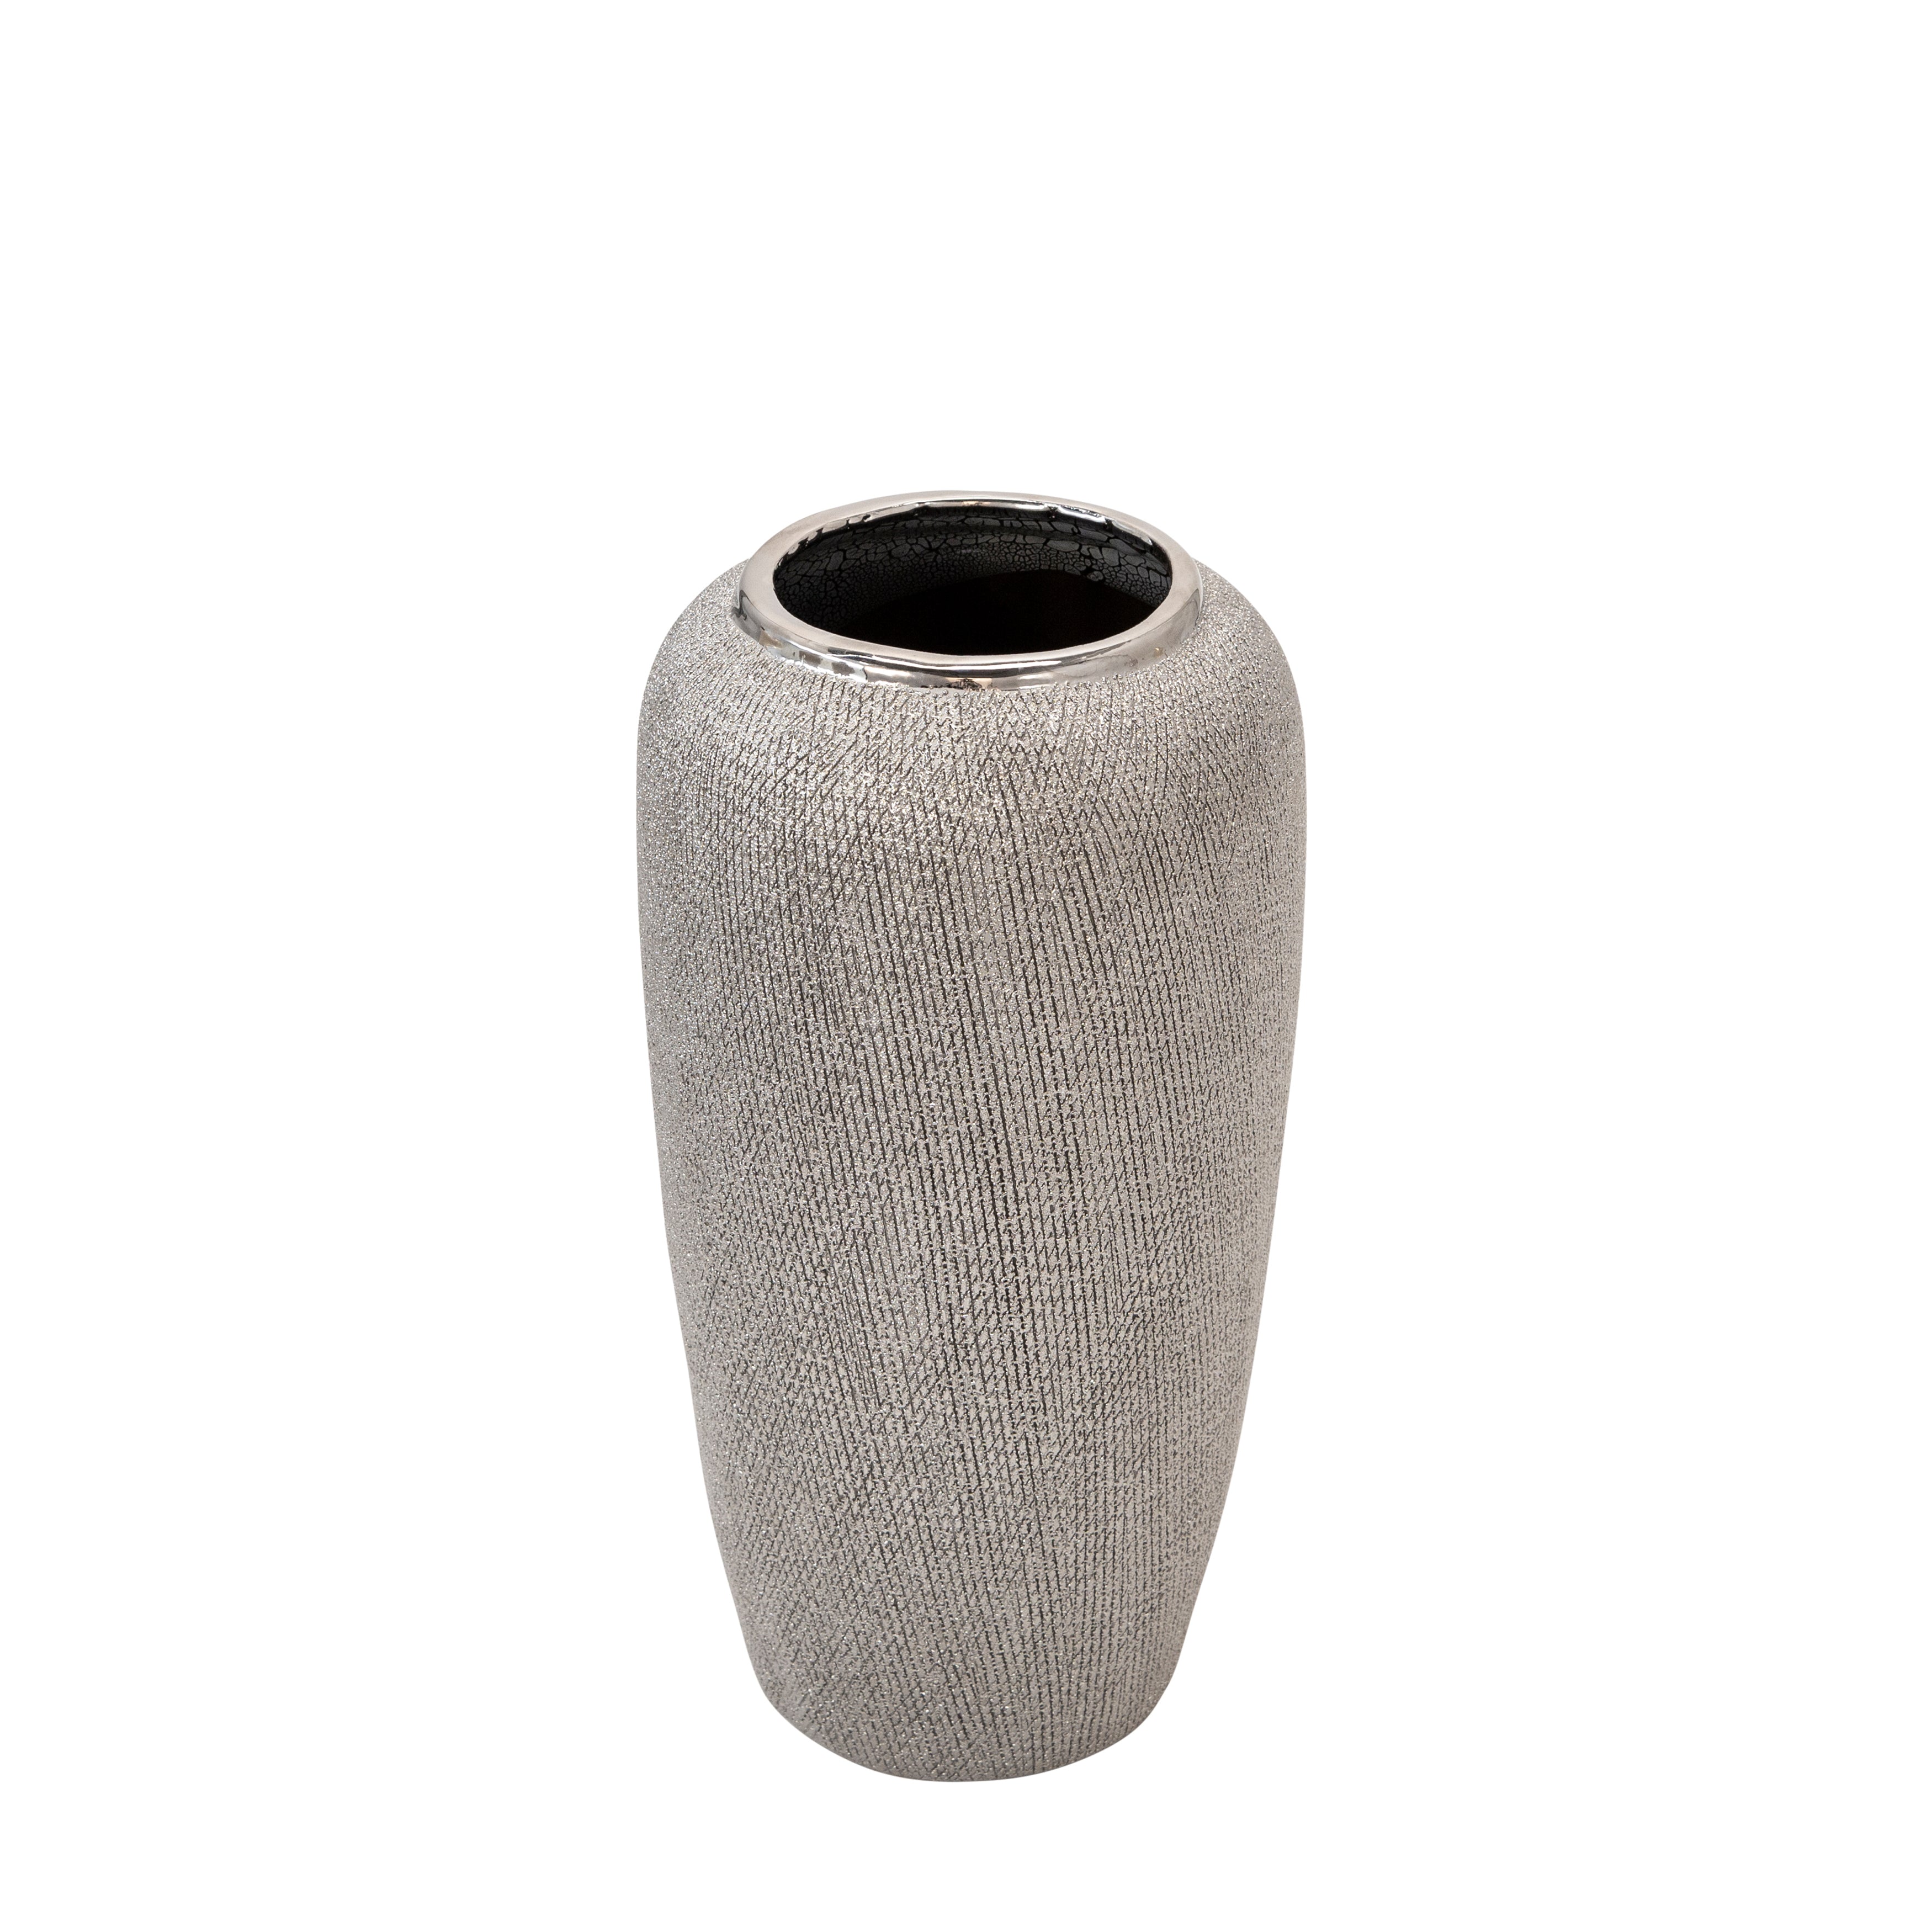 Glitz Ceramic Round Vase - Silver